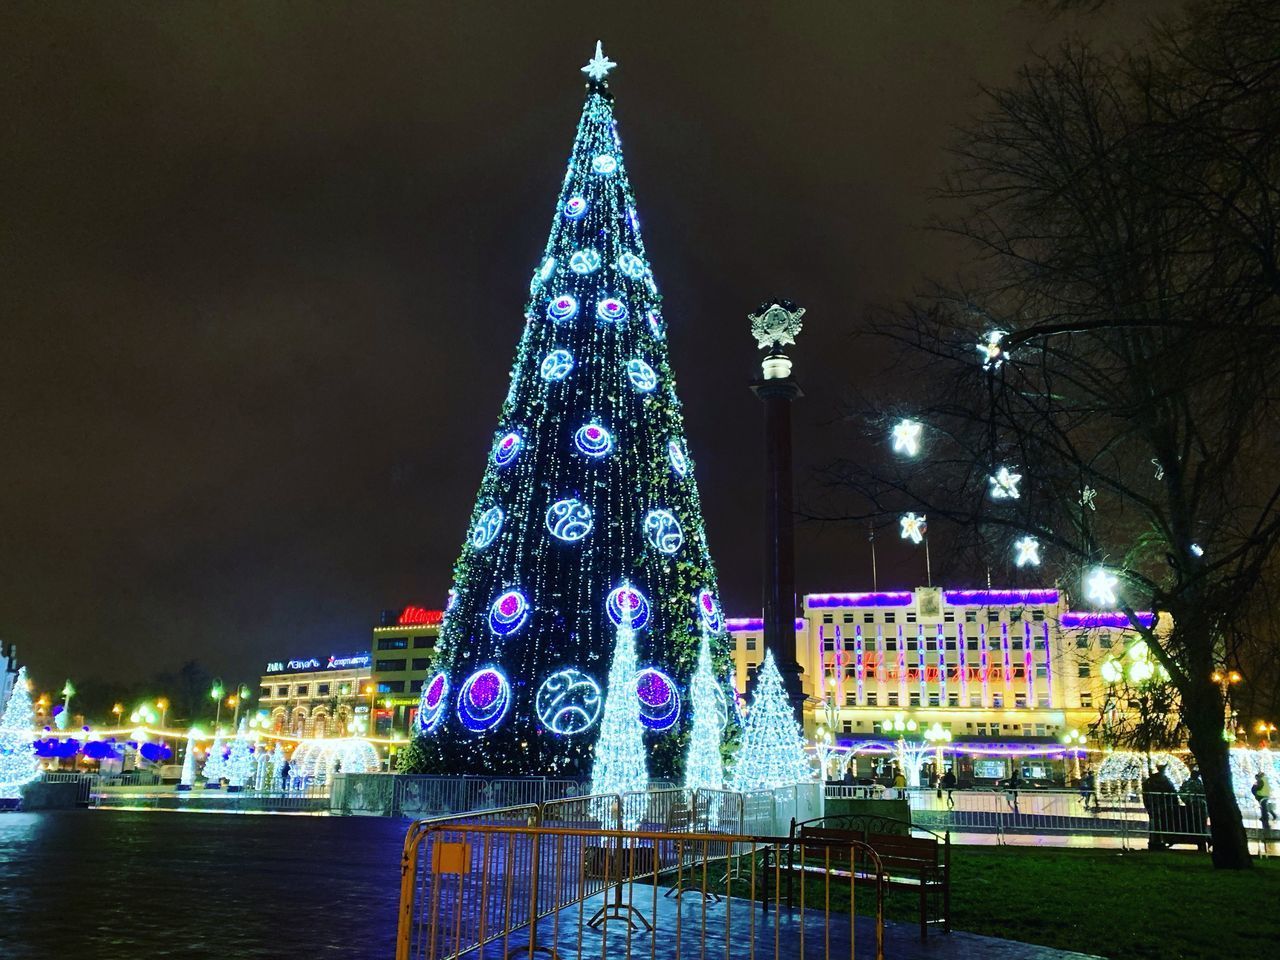 ILLUMINATED CHRISTMAS TREE BY BUILDING AT NIGHT